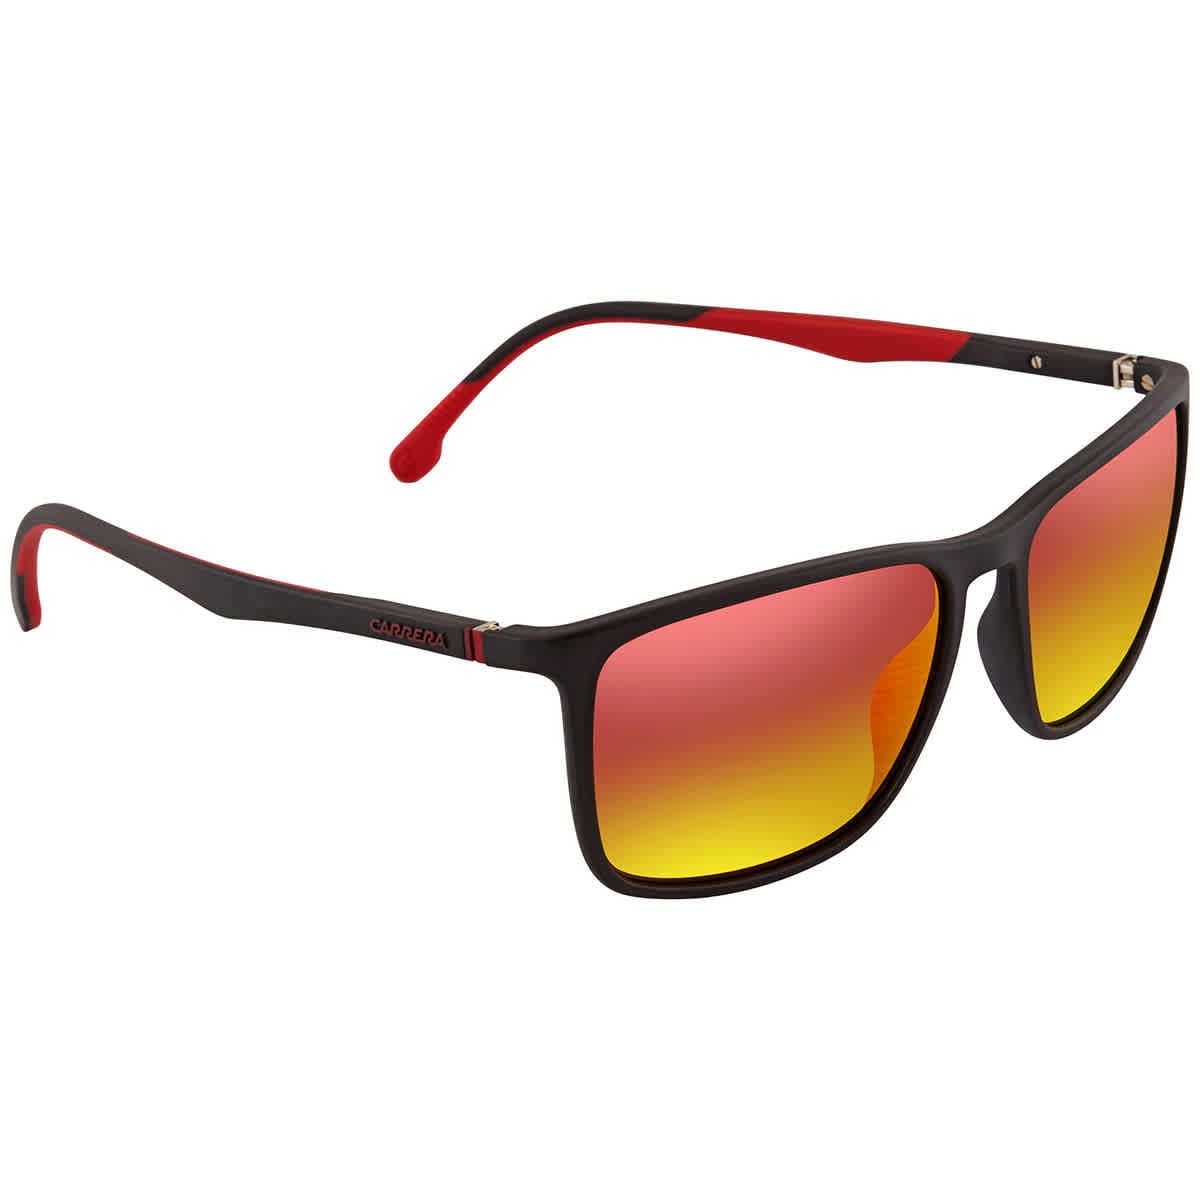 Carrera Red HD Mirror Rectangular Sunglasses CARRERA 8031/S 0BLX/W3 57 -  